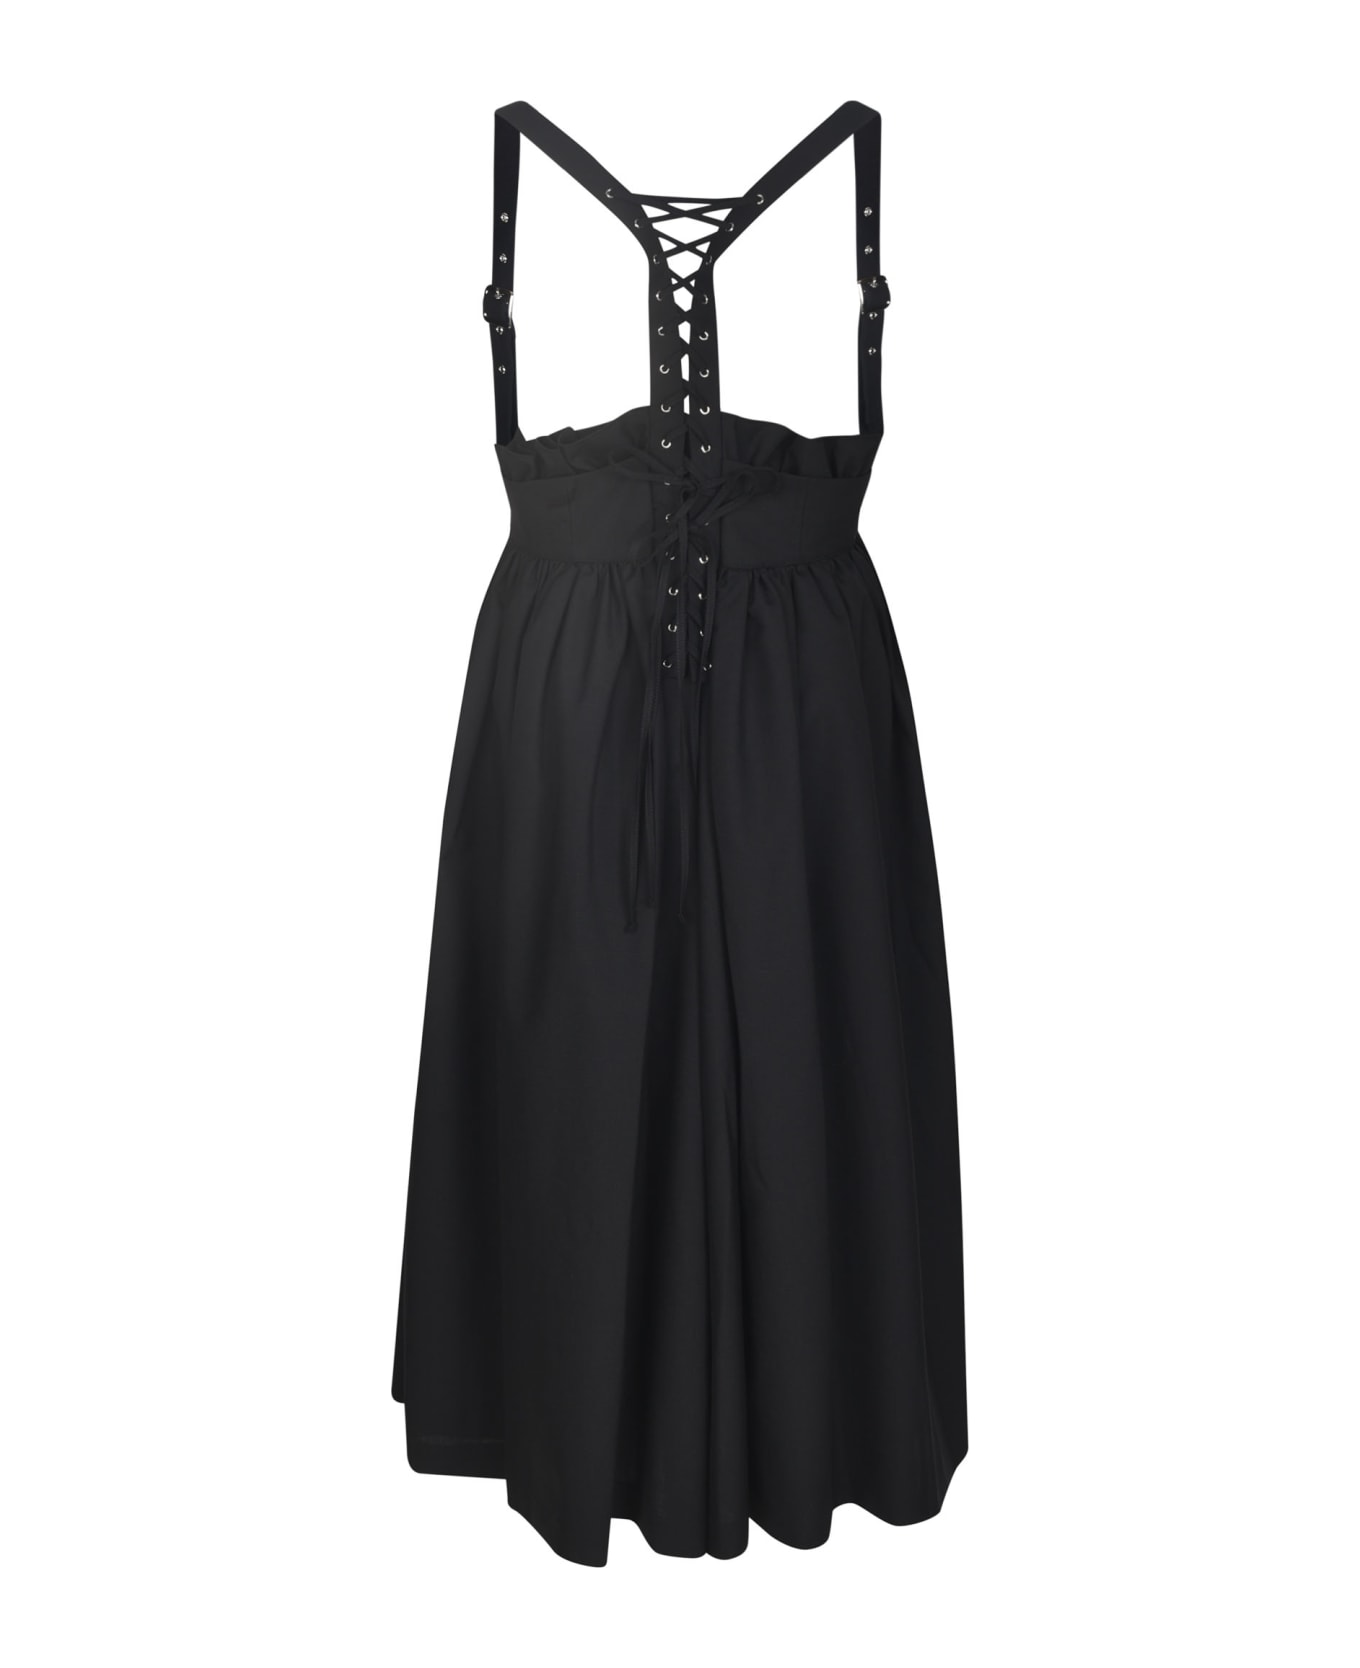 Comme des Garçons Noir Kei Ninomiya Ruffle Detail Flare Buckled Dress - Black